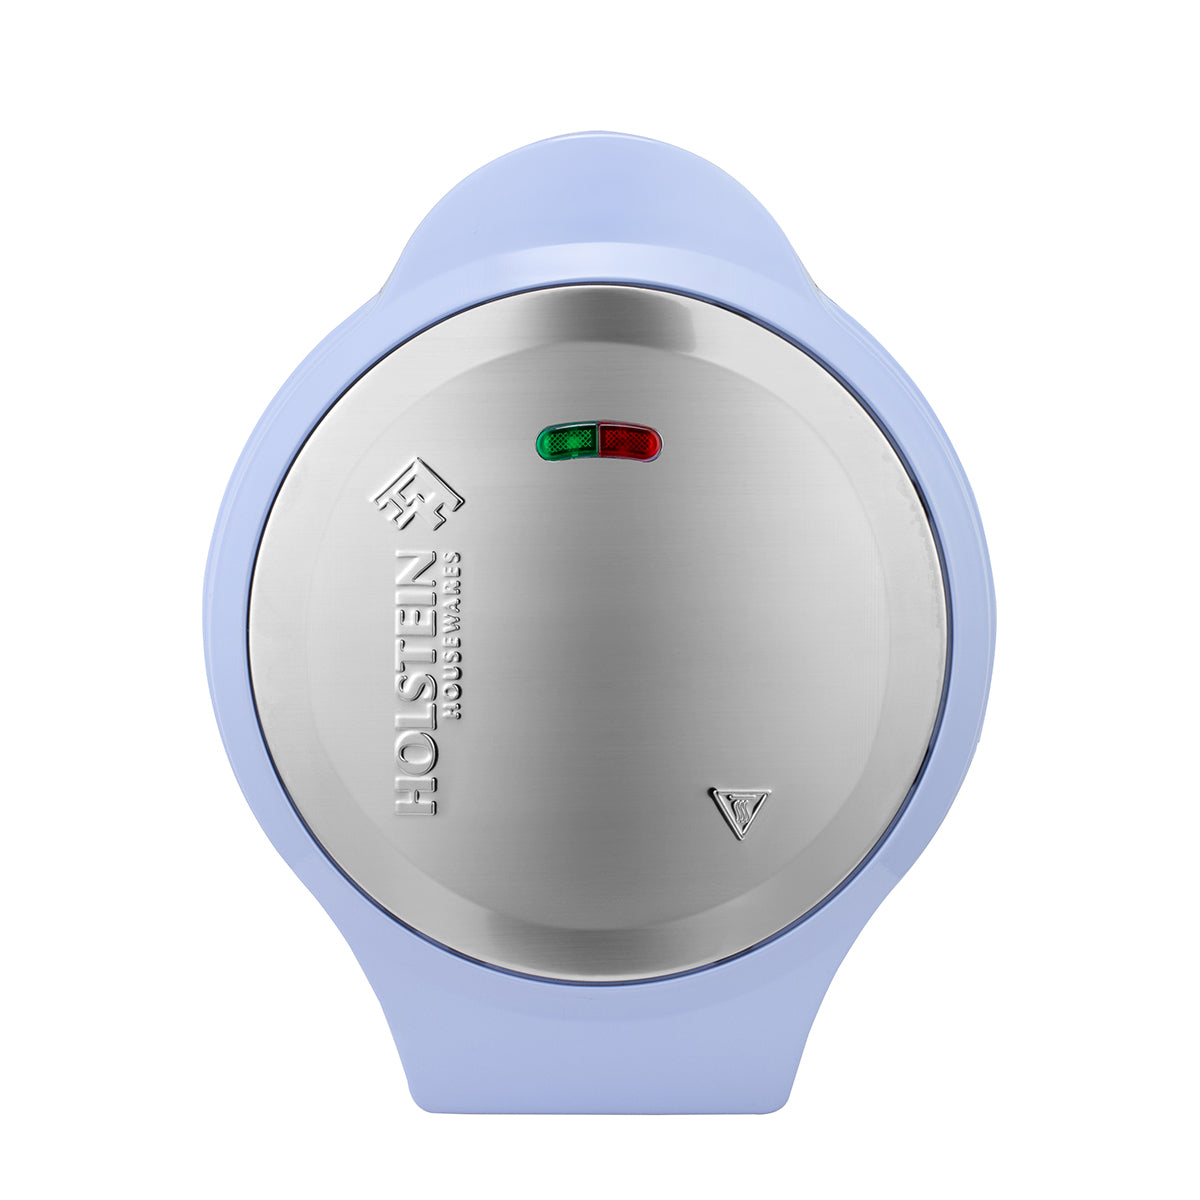 HomeCraft HCECS8SS 8-Egg Cooker with Buzzer - 20205444